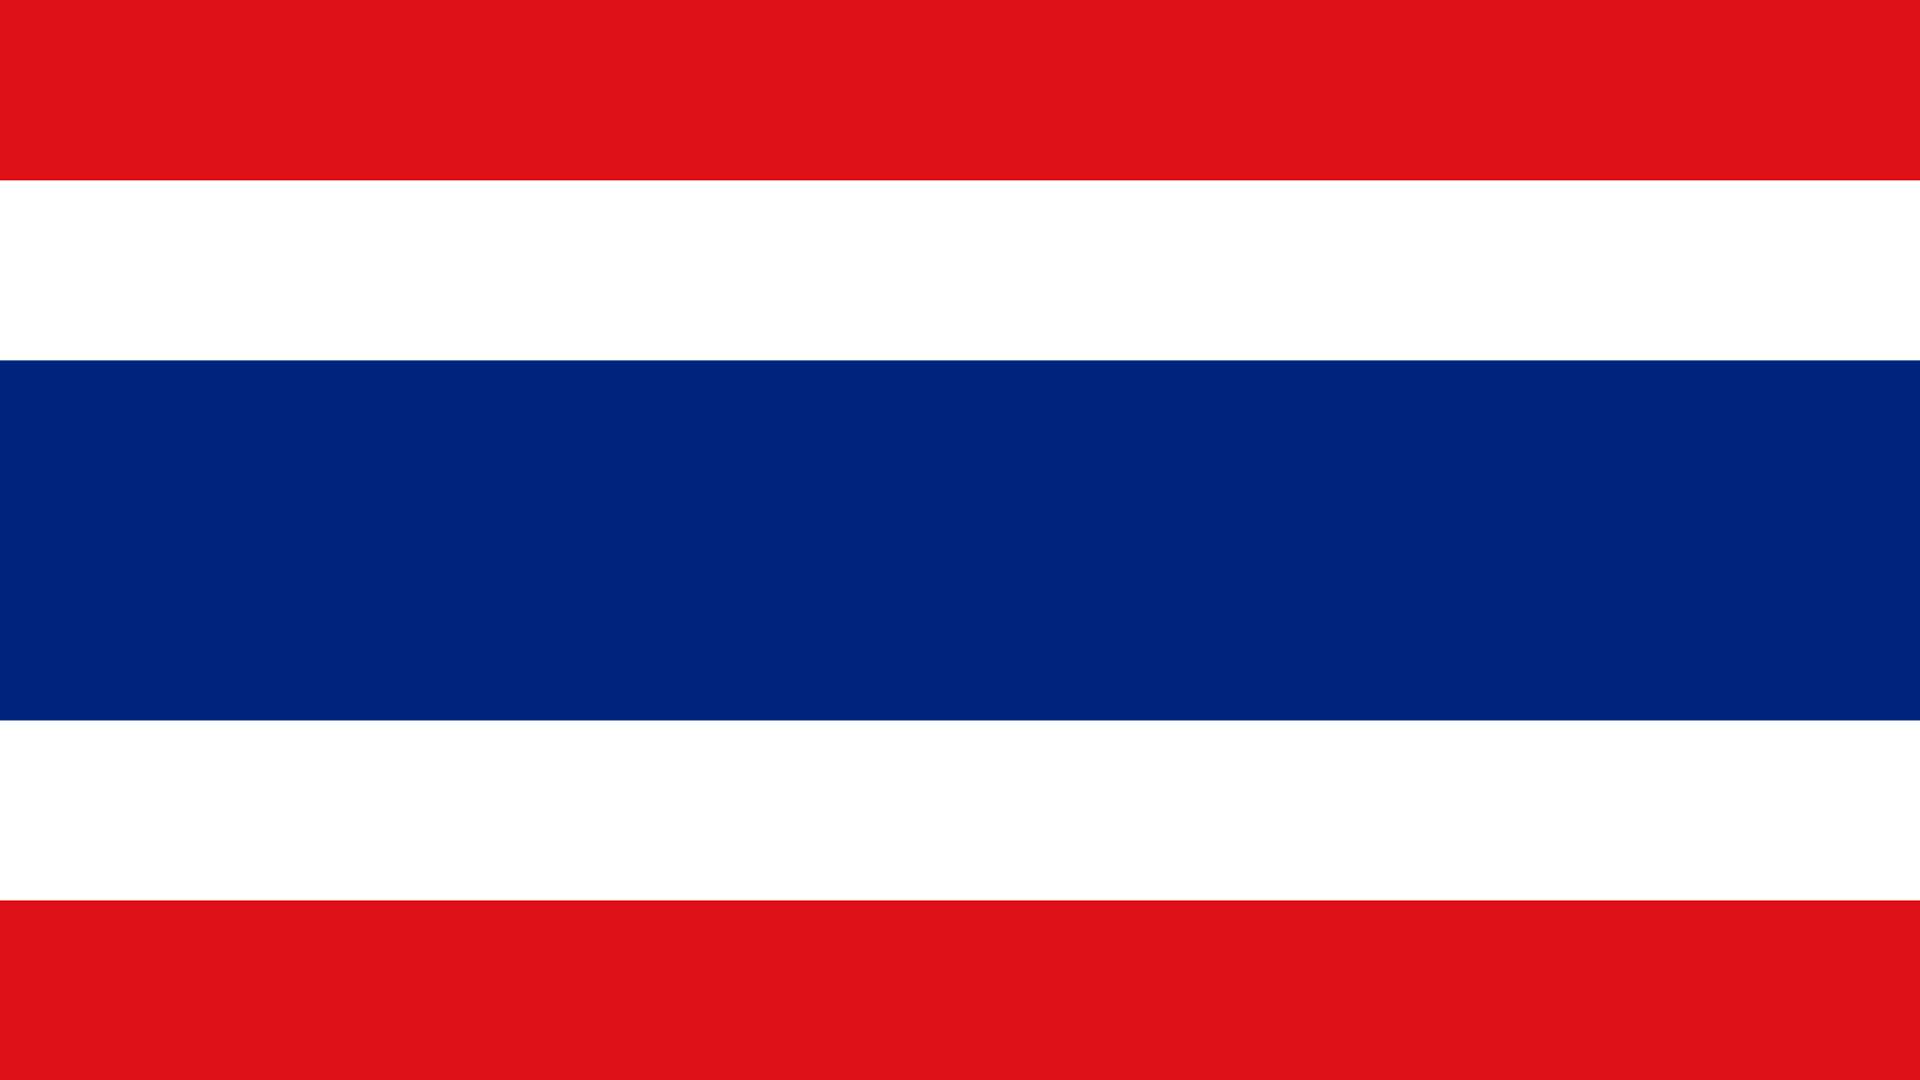 Thailand Flag Wallpaper High Definition Quality Widescreen